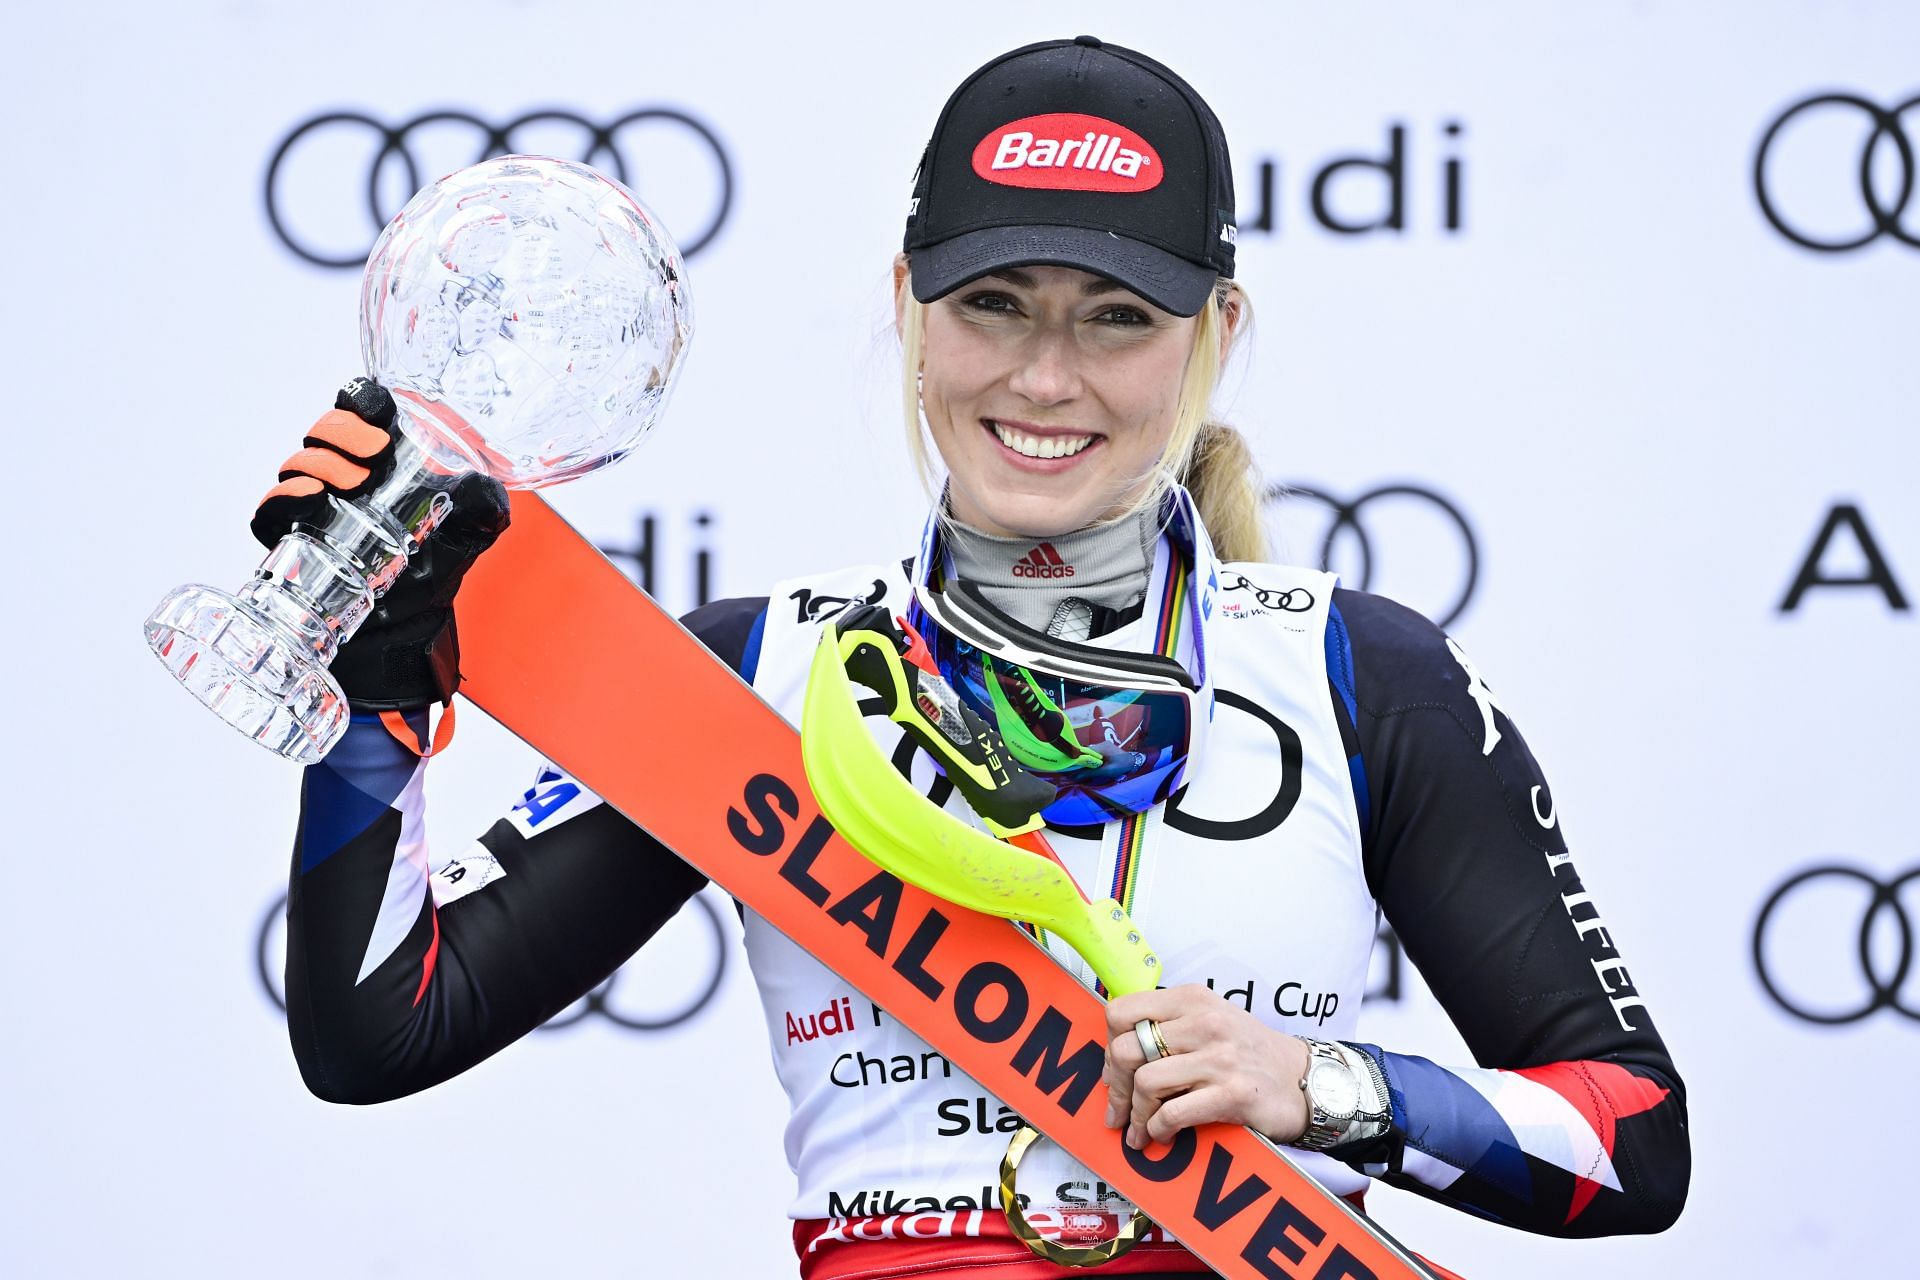 Audi FIS Alpine Ski World Cup Finals - Women